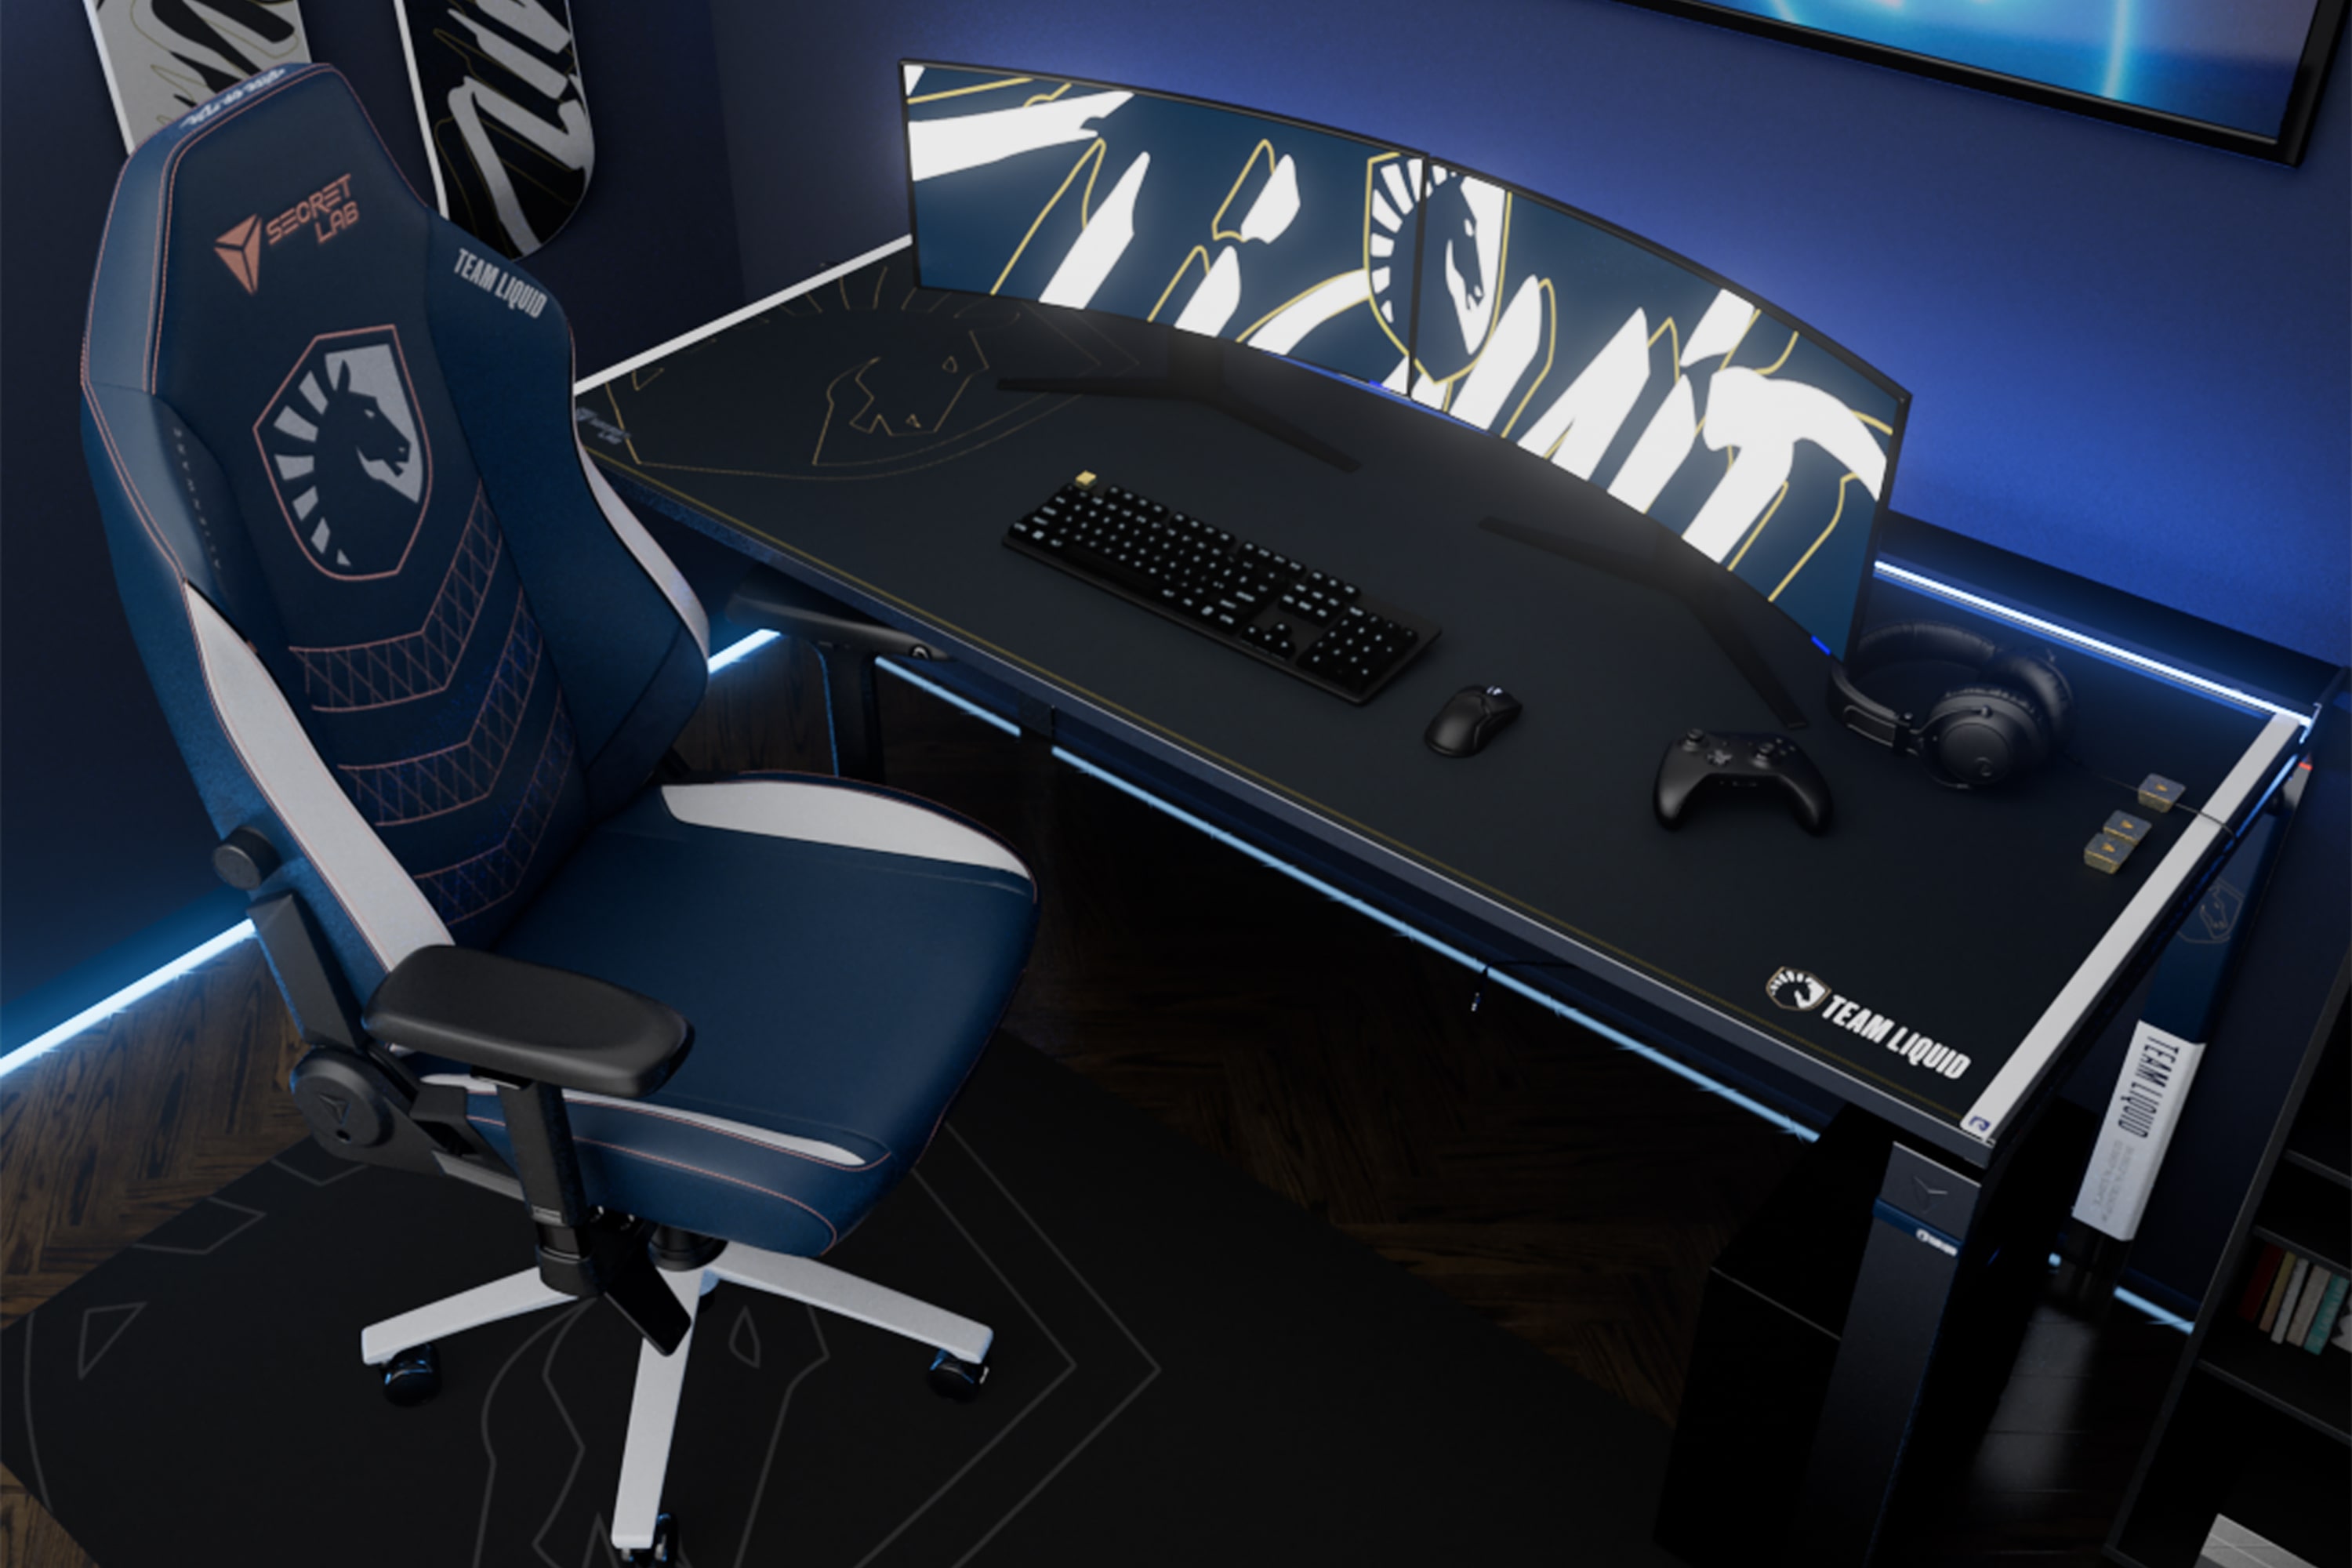 Secretlab Gaming Chairs & Gaming Desk